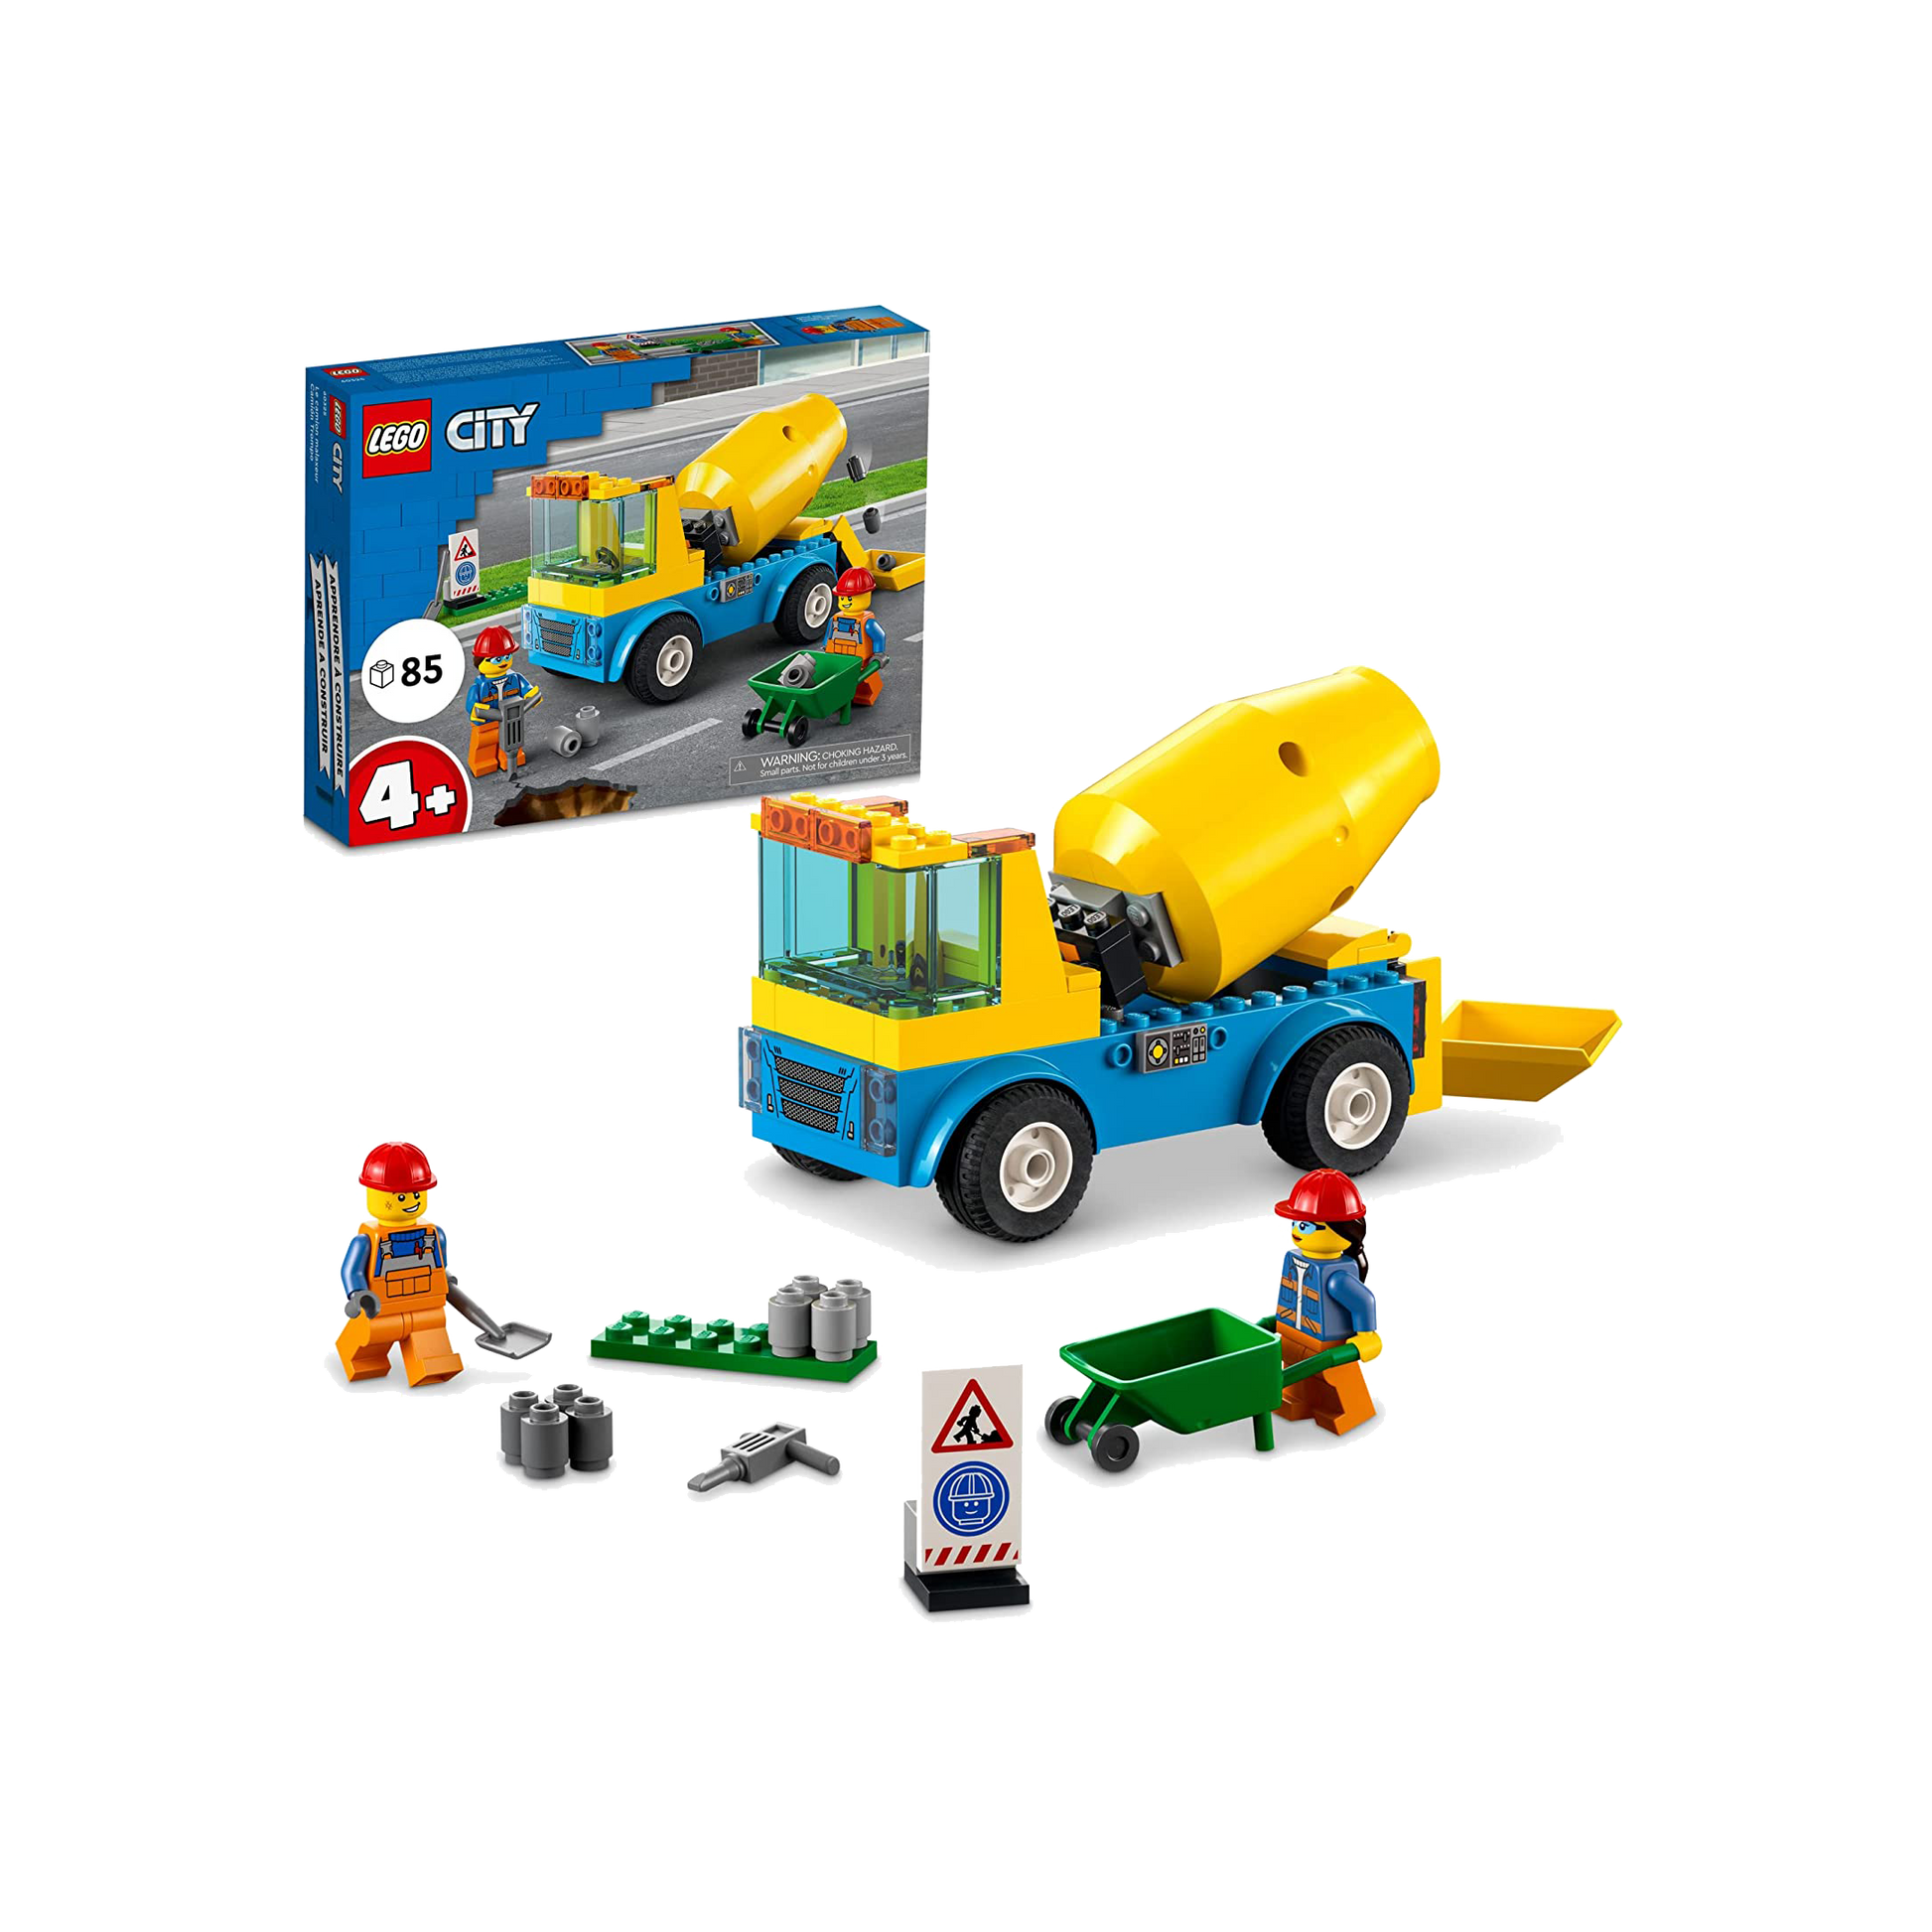 LEGO City Vehicles Cement Mixer Truck (85 Pieces), Ages 4+